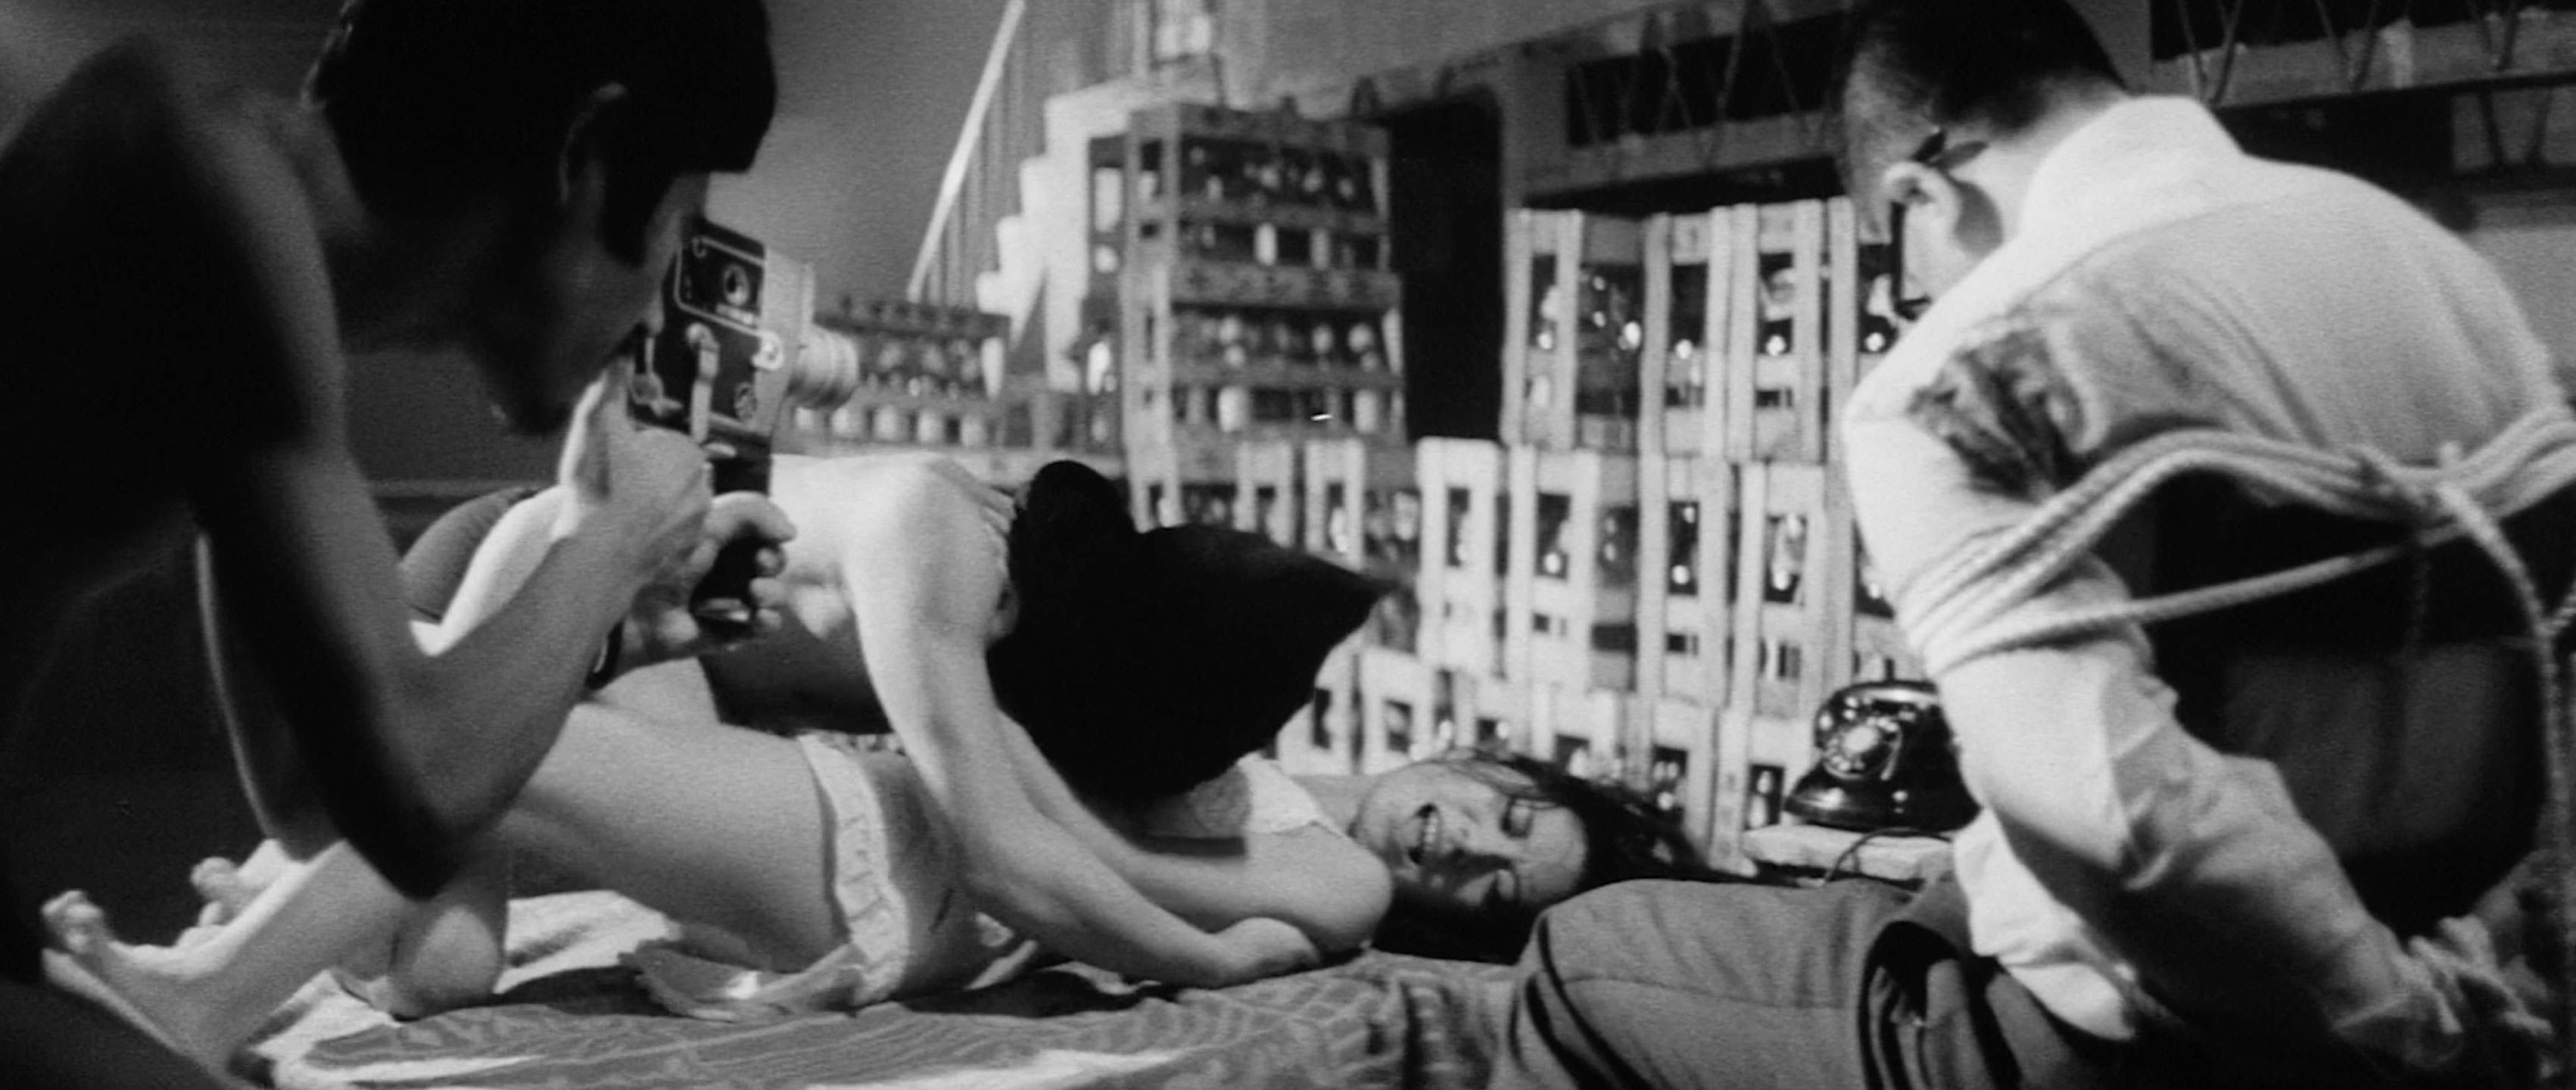 Movies 70s and 60s erotic mainstream erotic, obscene